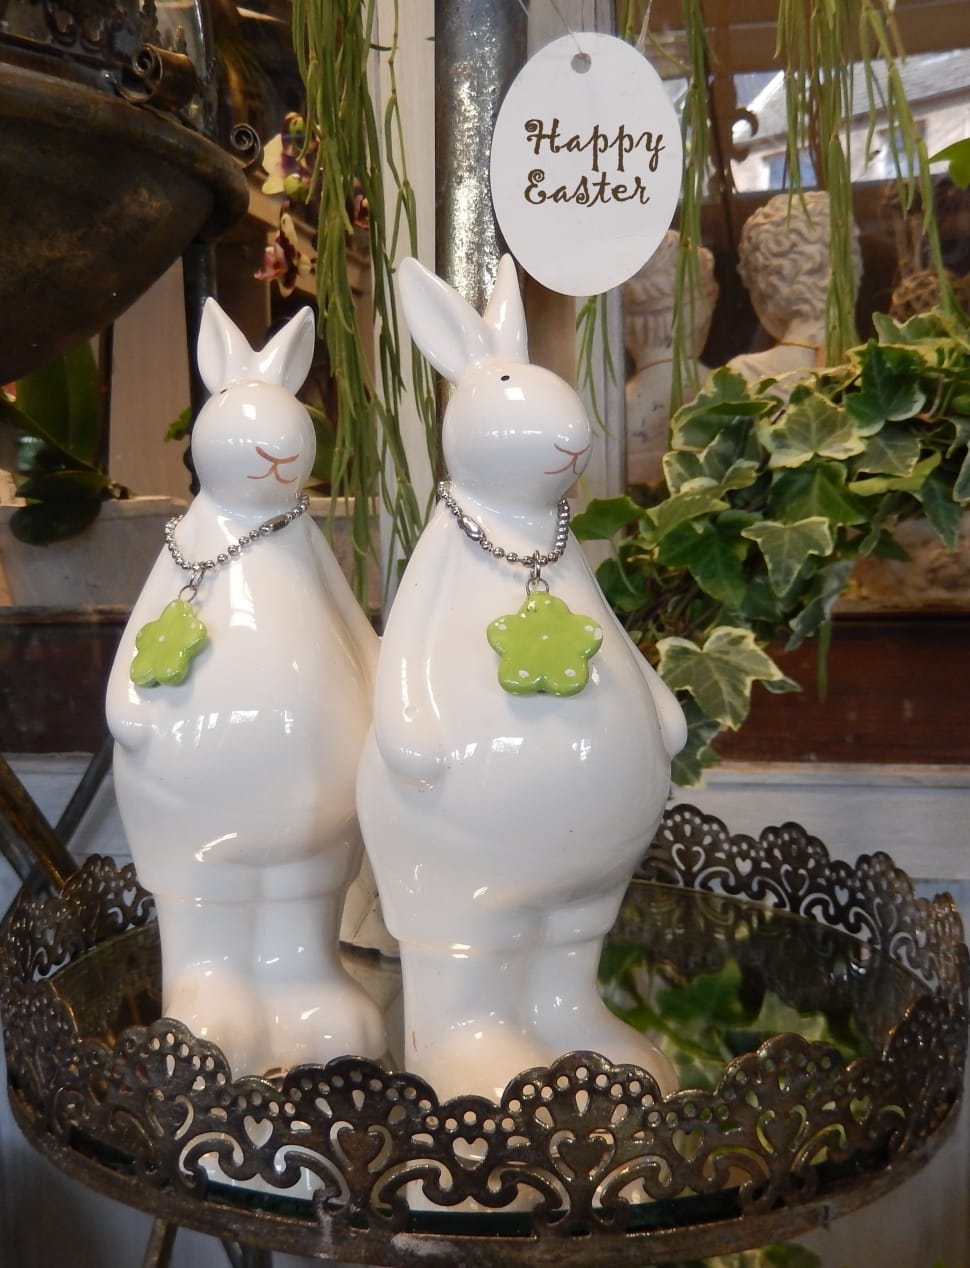 2 white rabbit ceramic figurines preview